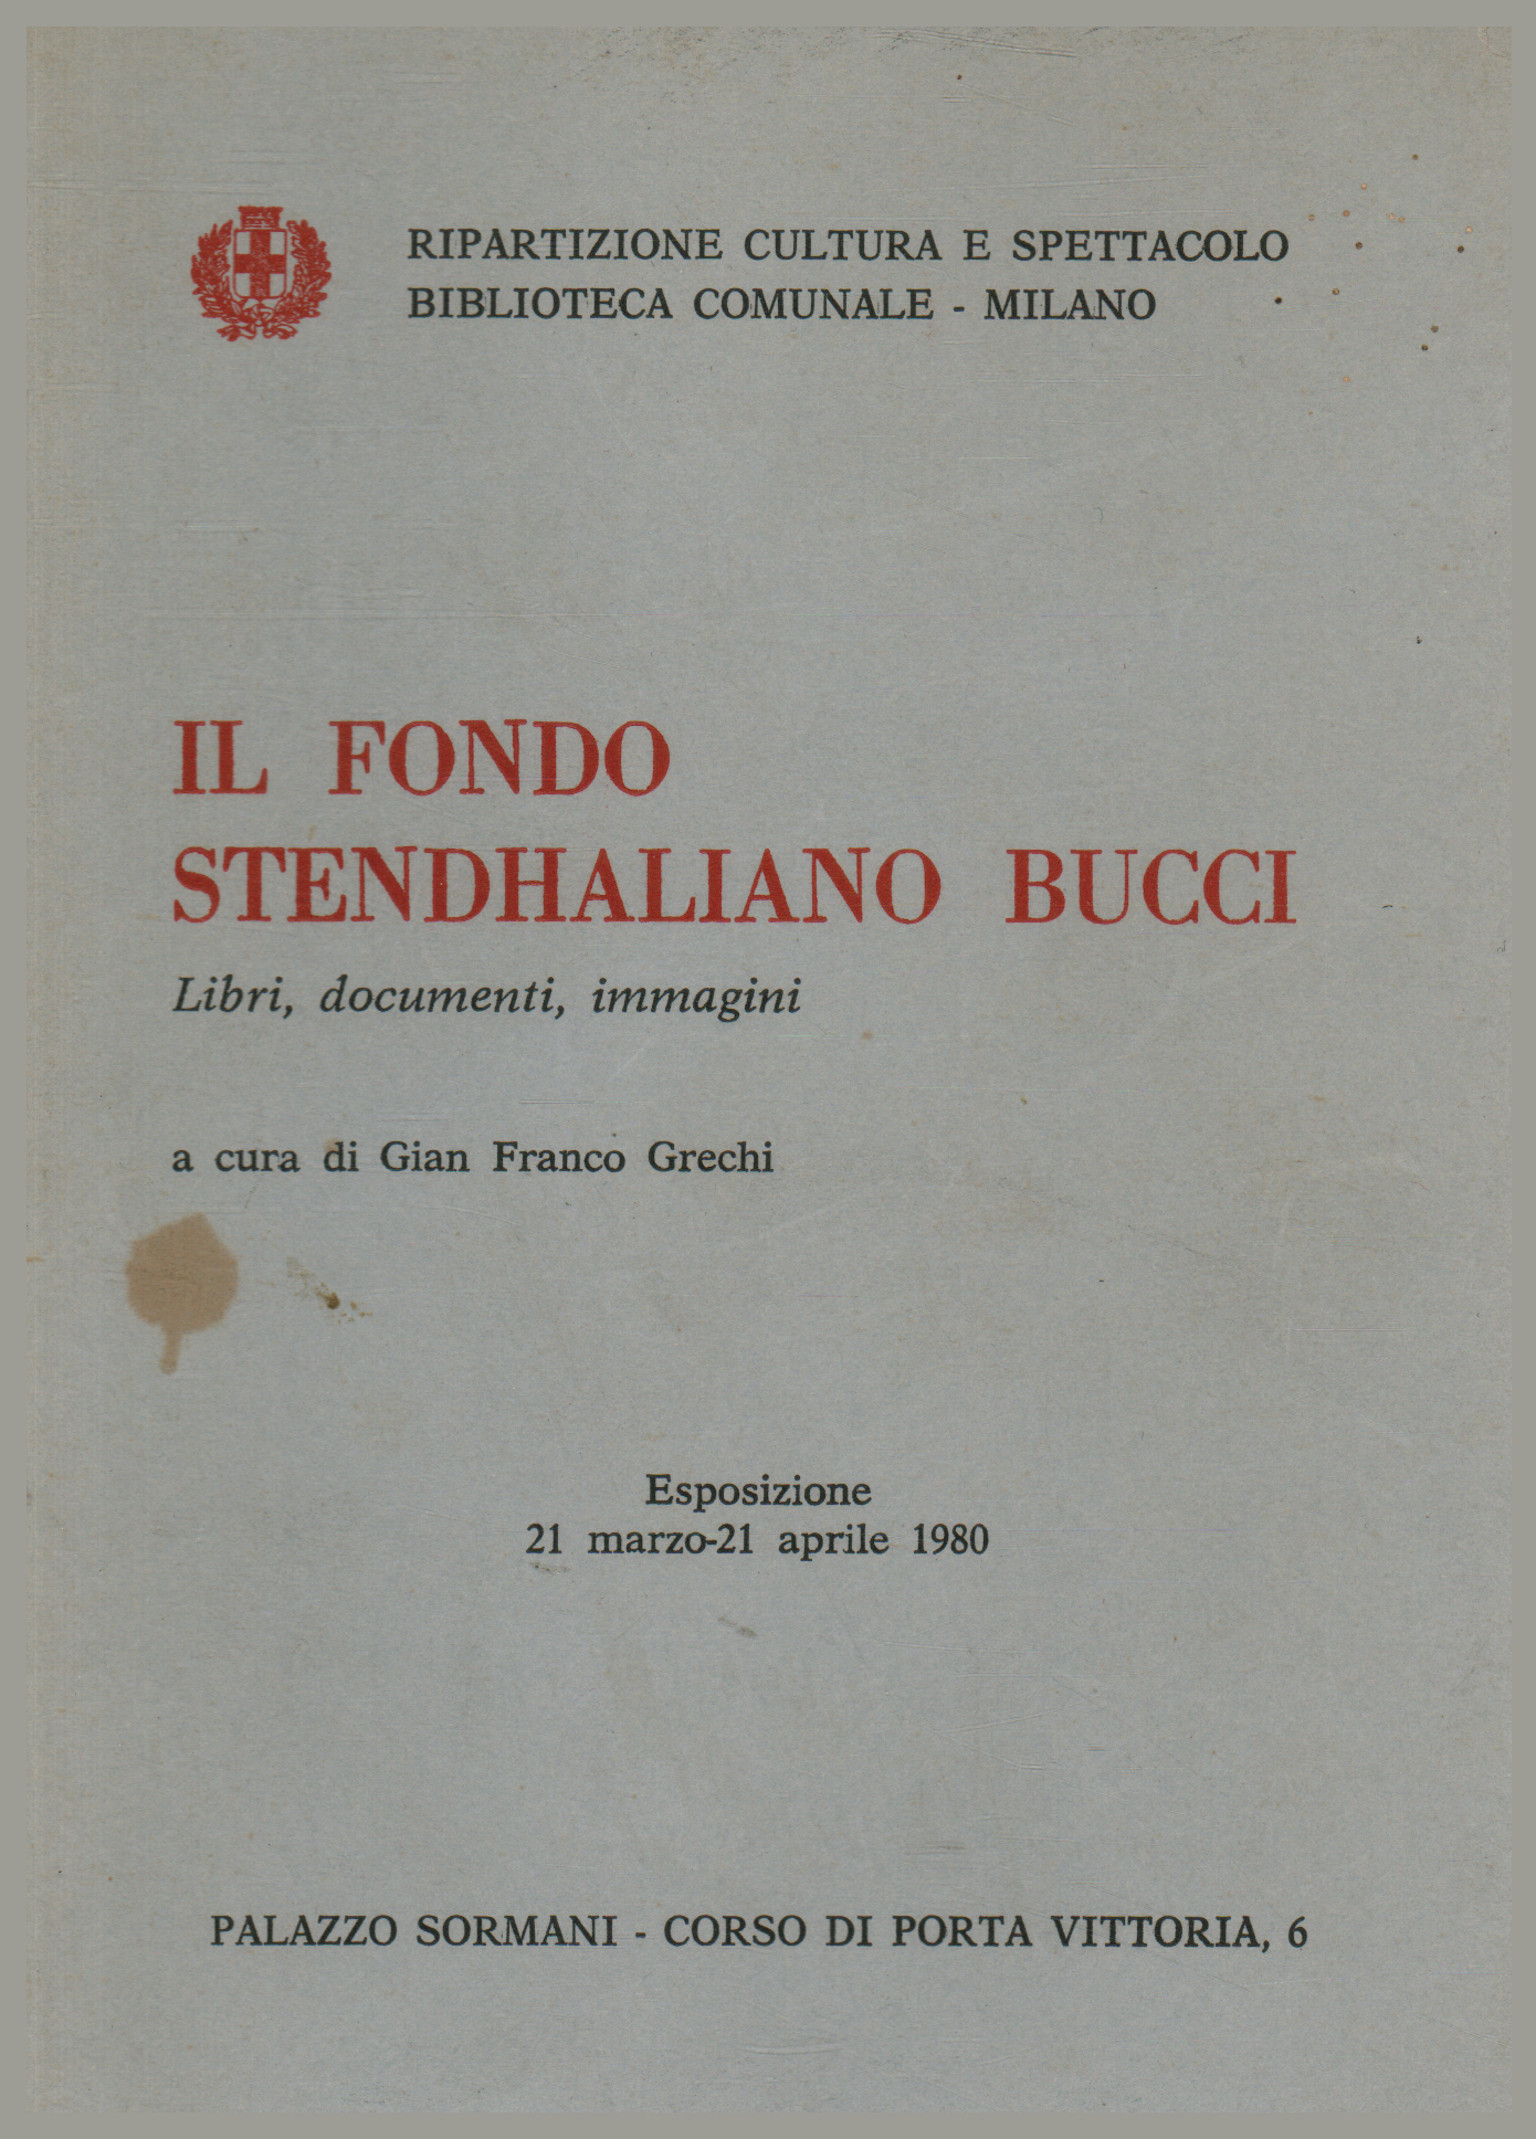 Der Fonds Stendhaliano Bucci, Gian Franco Grechi